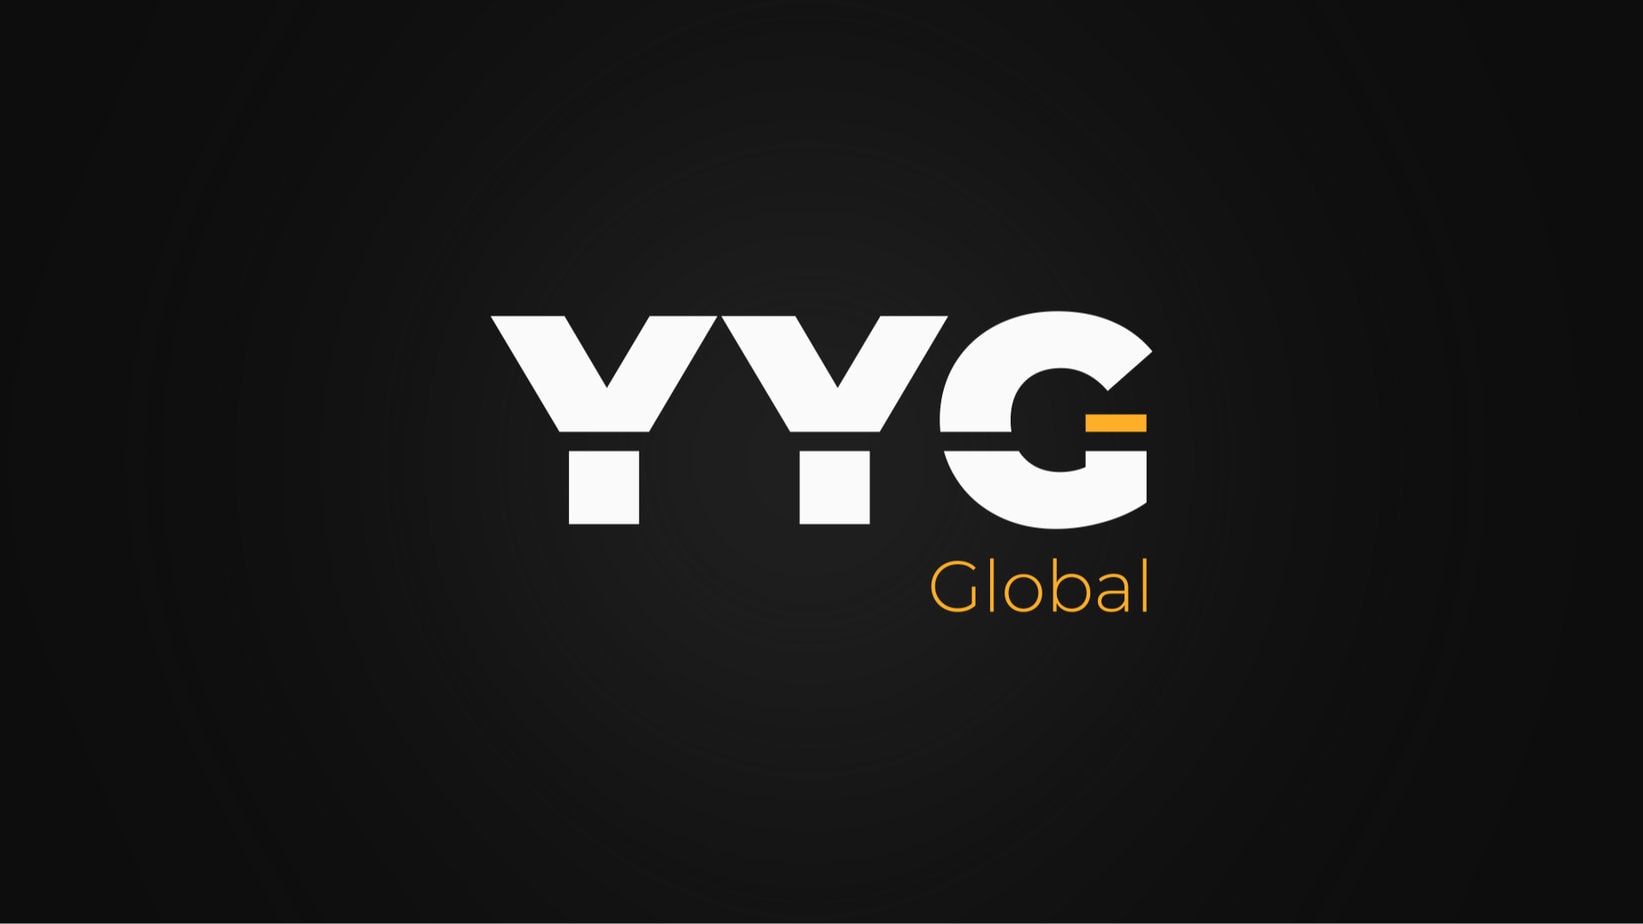 yyg logo design